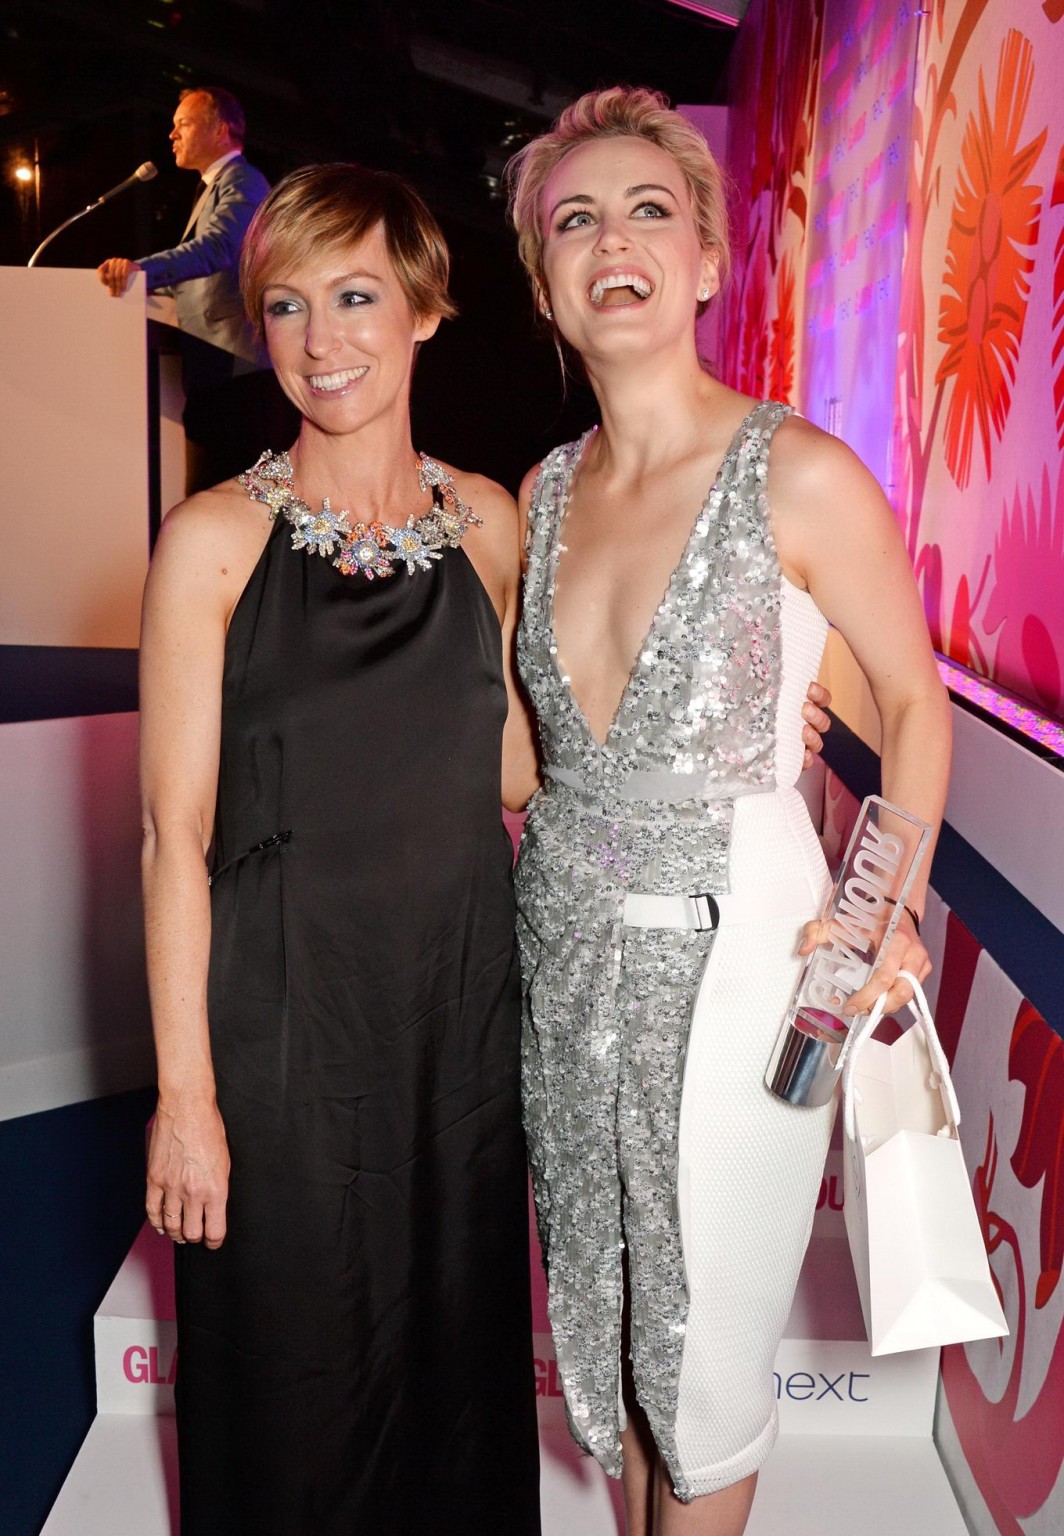 Taylor schilling cleavy en los premios glamour women of the year en londres
 #75193553